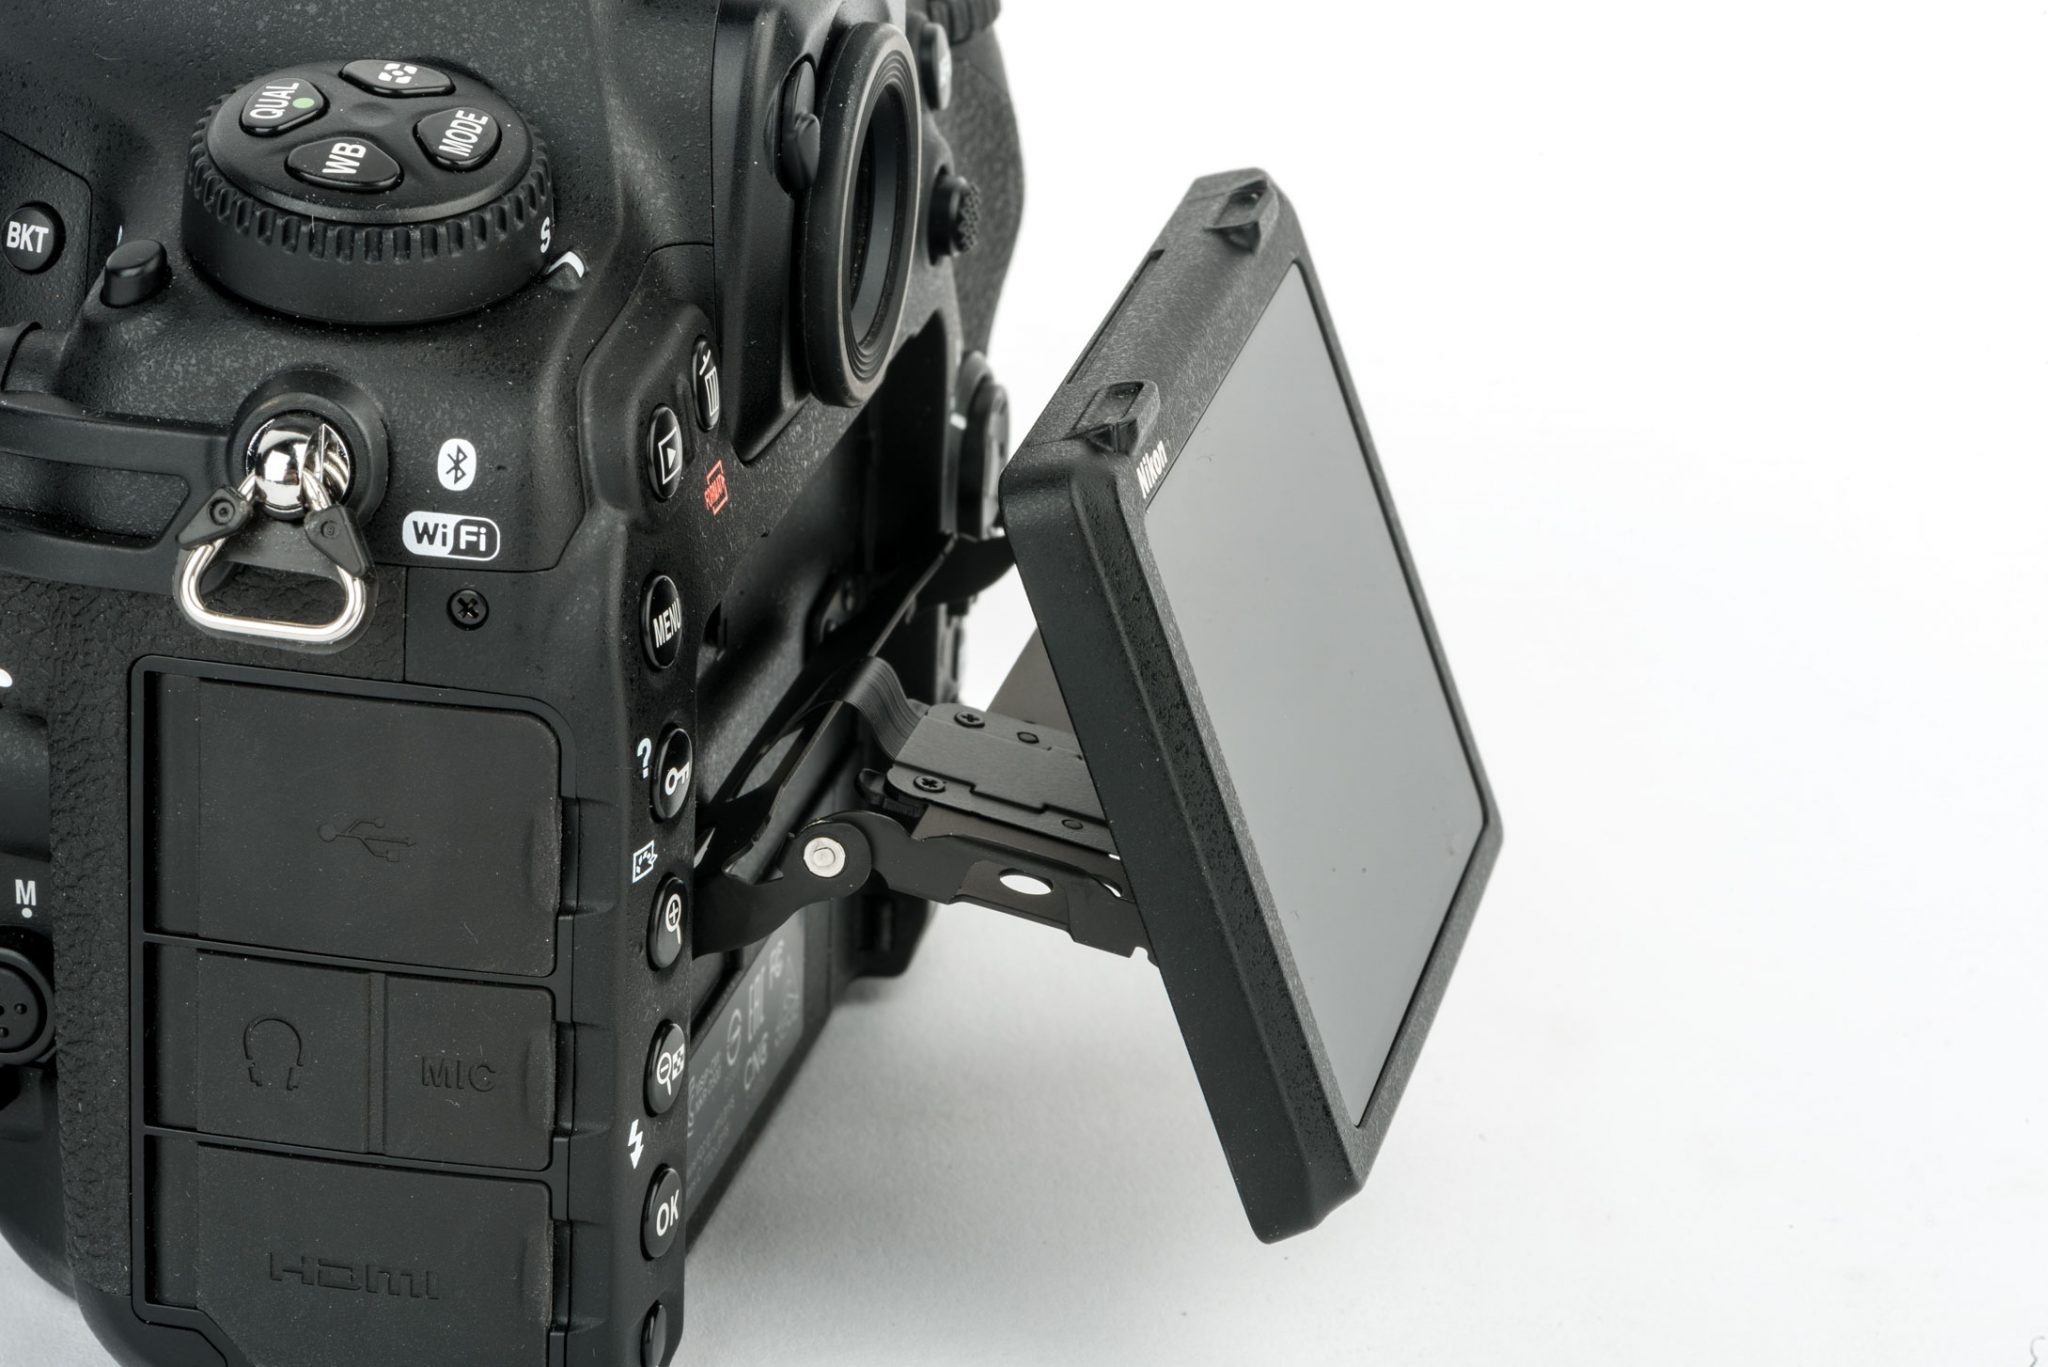 Nikon D500 with 16-80mm Lens Quick Test - DSPORT Magazine